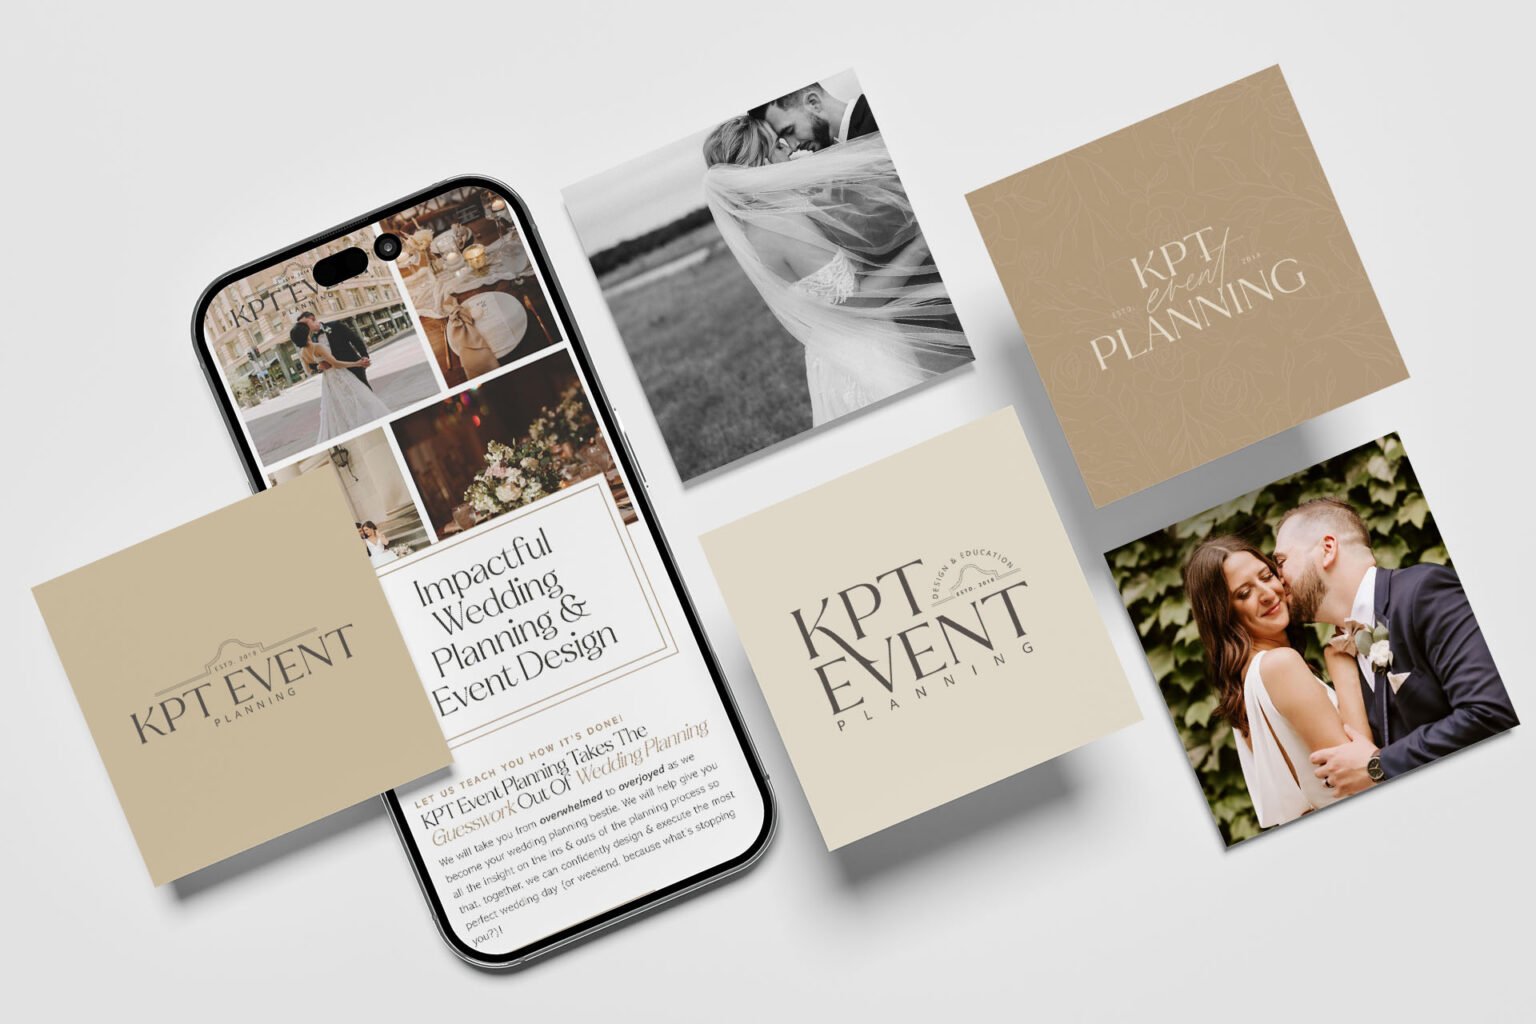 kpt event planning brand and website design for wedding planner lenya creative | Former Teacher Turned Wedding Planner Brand & Website Design | Lenya Creative